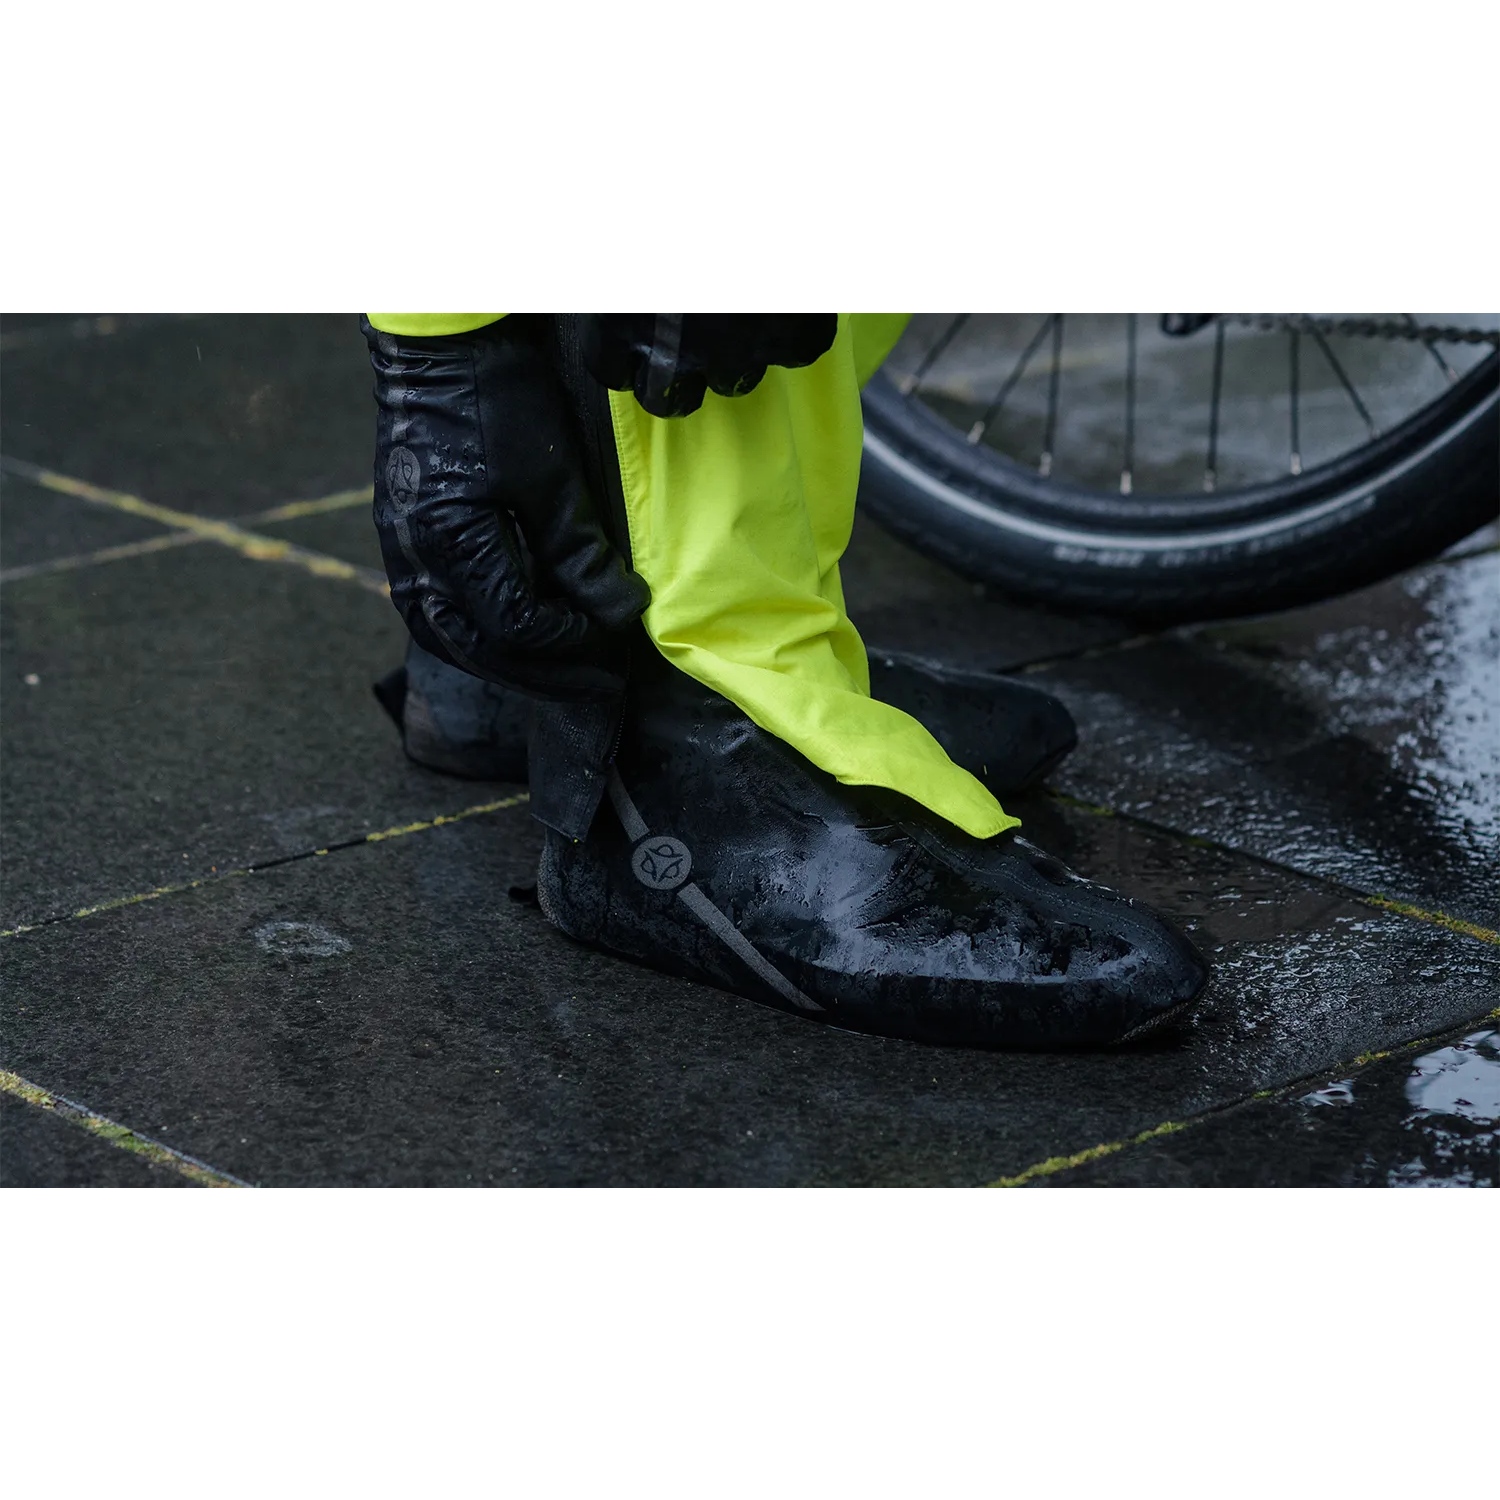 https://images.bike24.com/i/mb/54/0f/d9/agu-commuter-winter-rain-bike-boots-shoe-covers-black--20-1473249.jpg